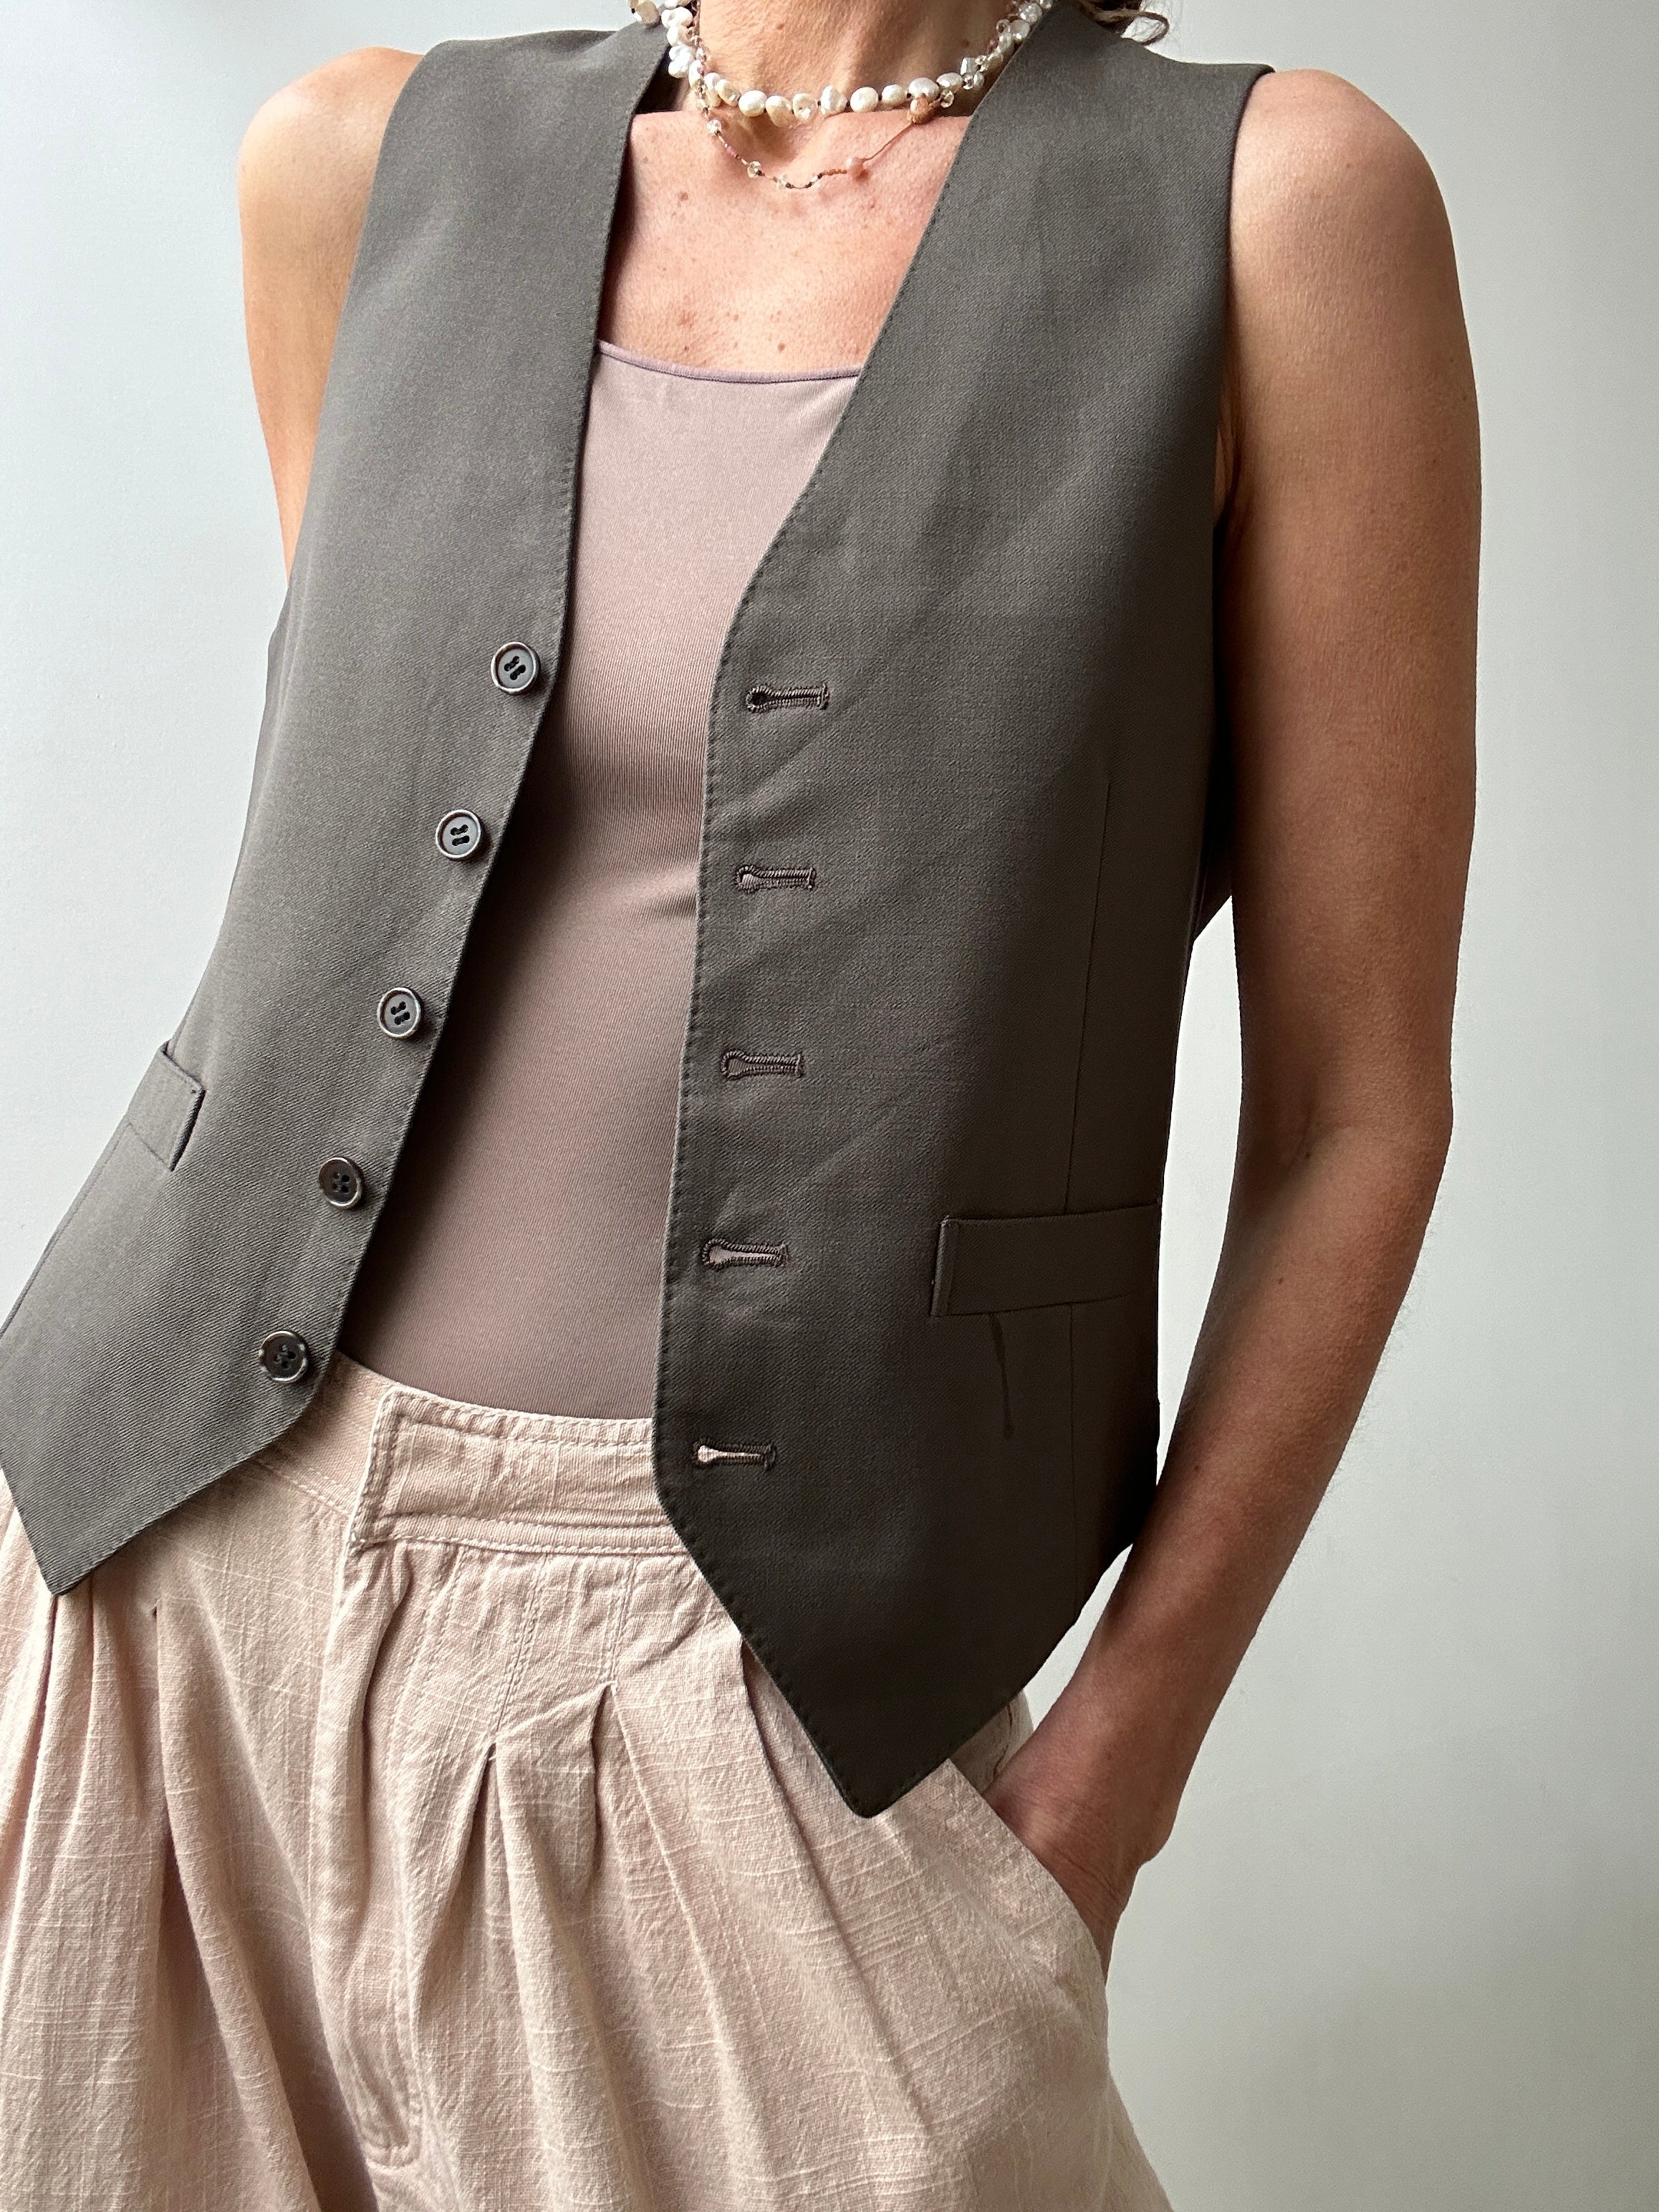 Future Nomads Vests Medium Vintage Suit Vest Grey Brown